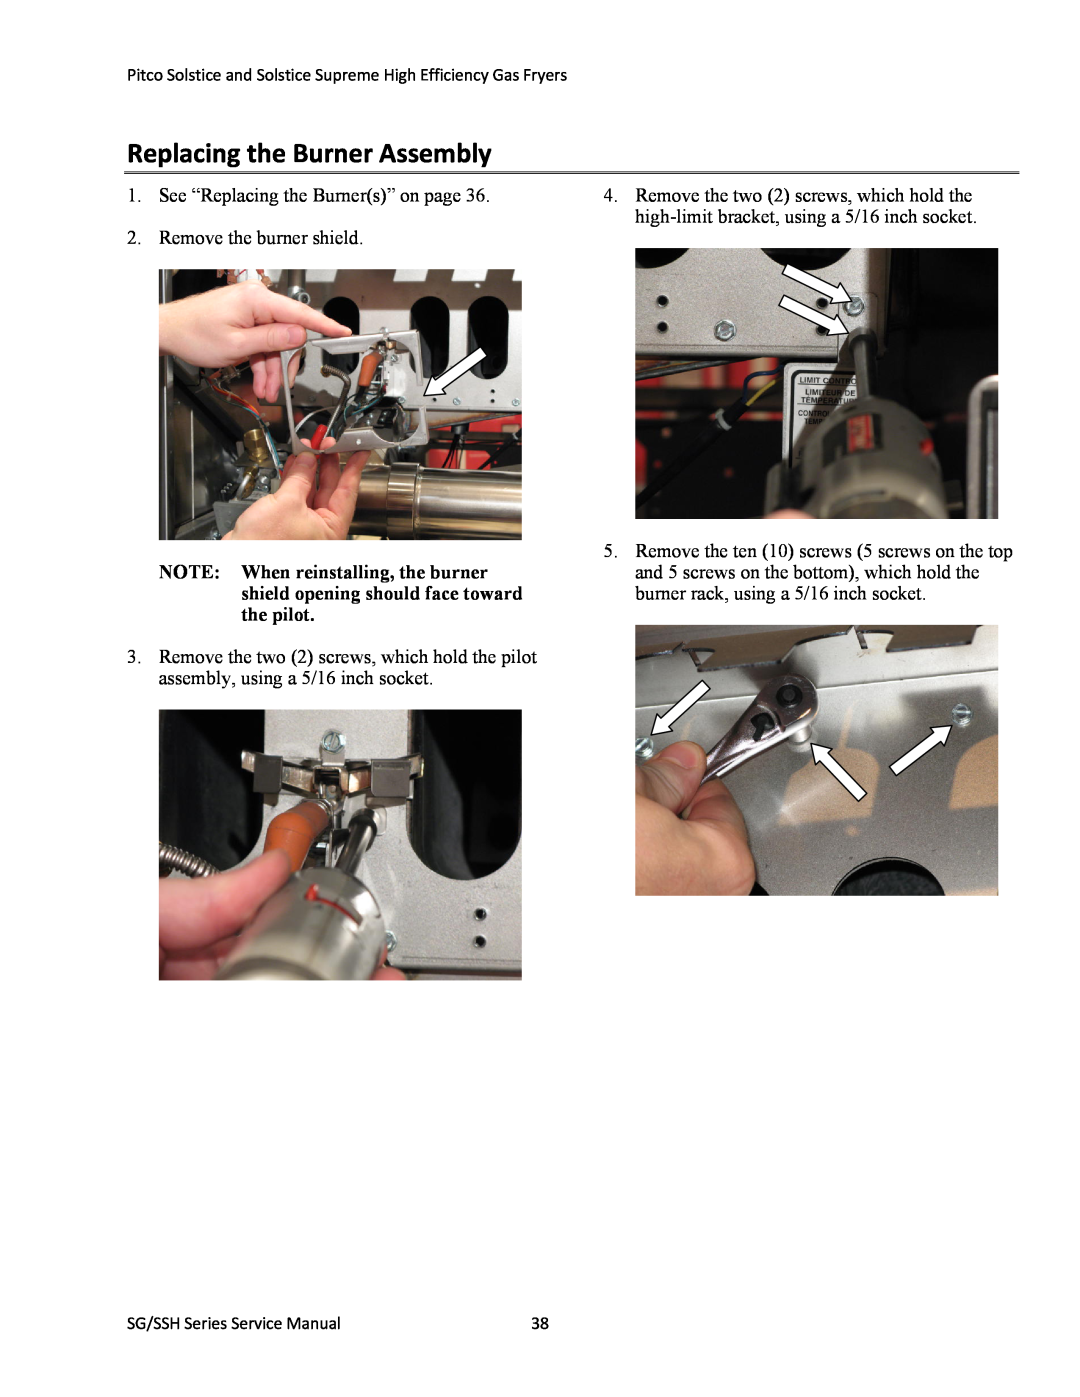 Pitco Frialator L22-345 manual Replacing the Burner Assembly 